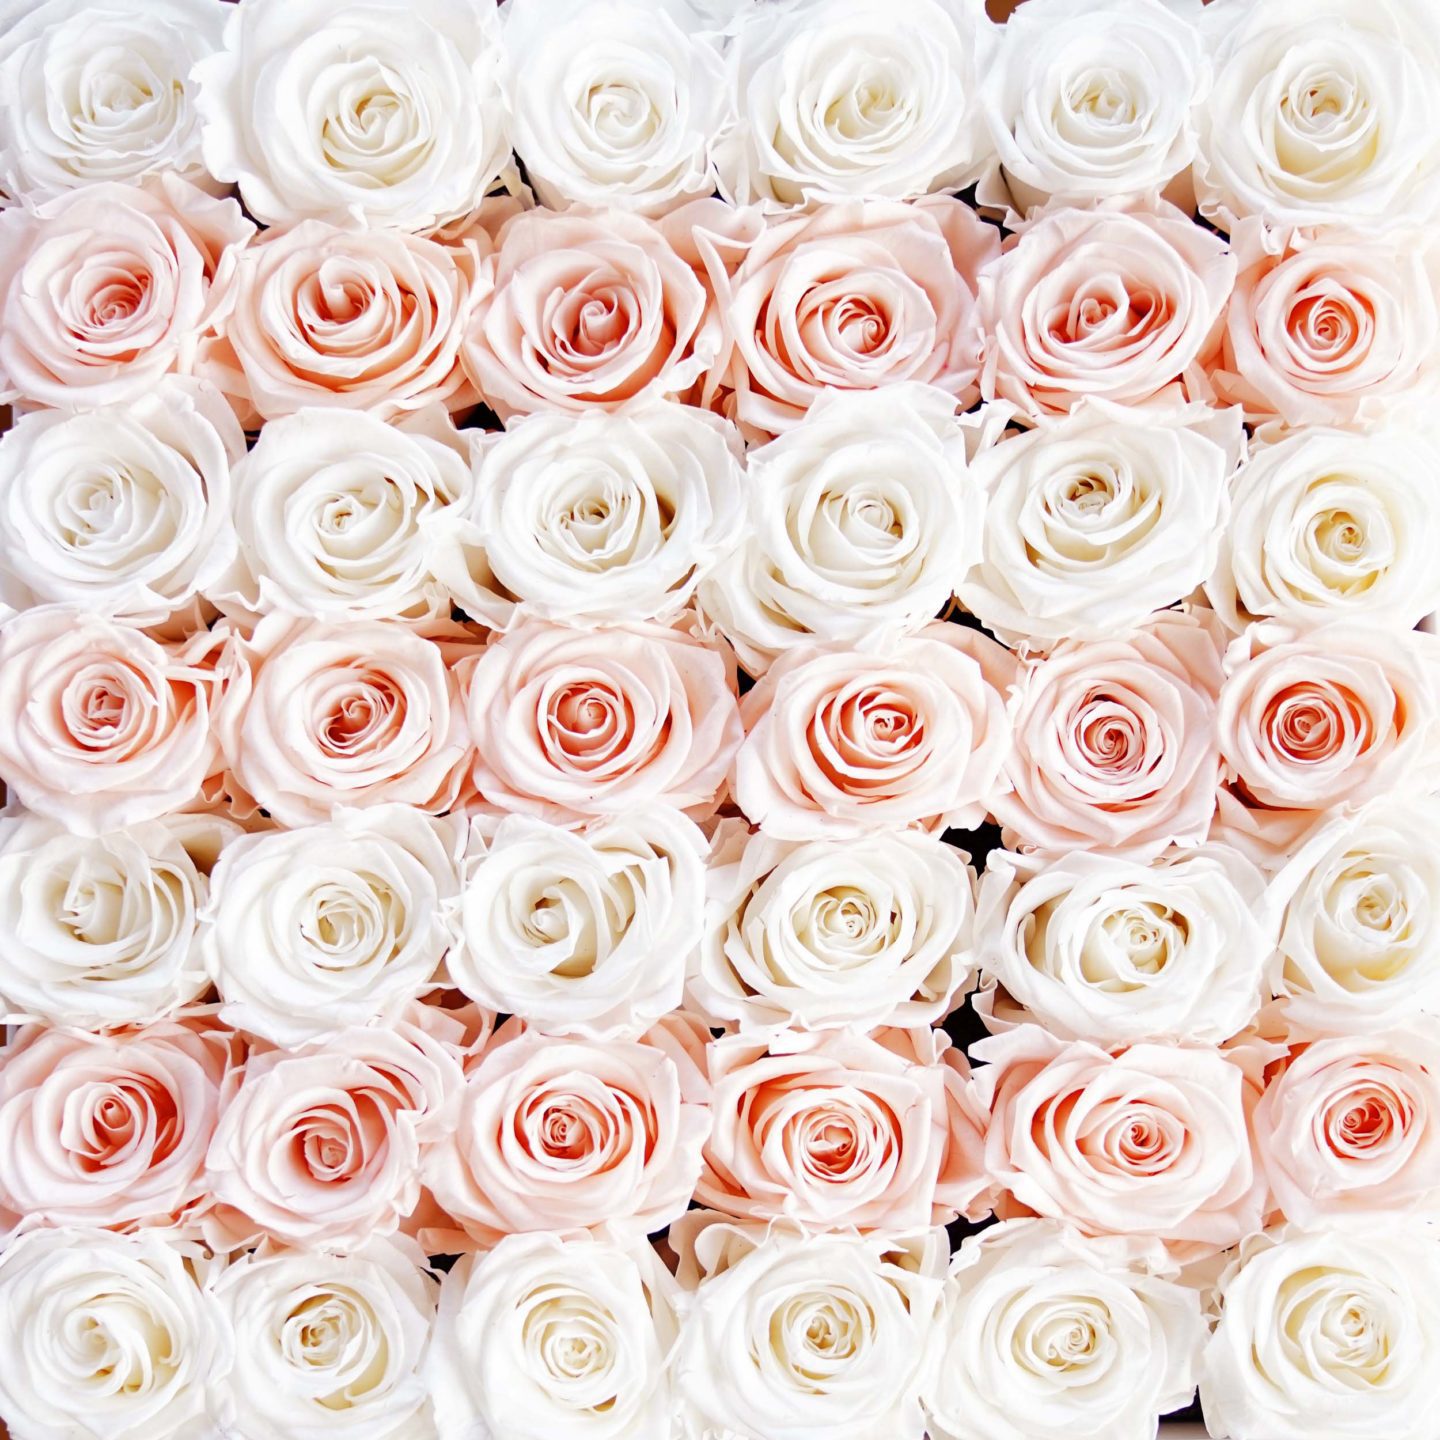 Venus Et Fleur Roses Valentine's Day | The Beauty Look Book